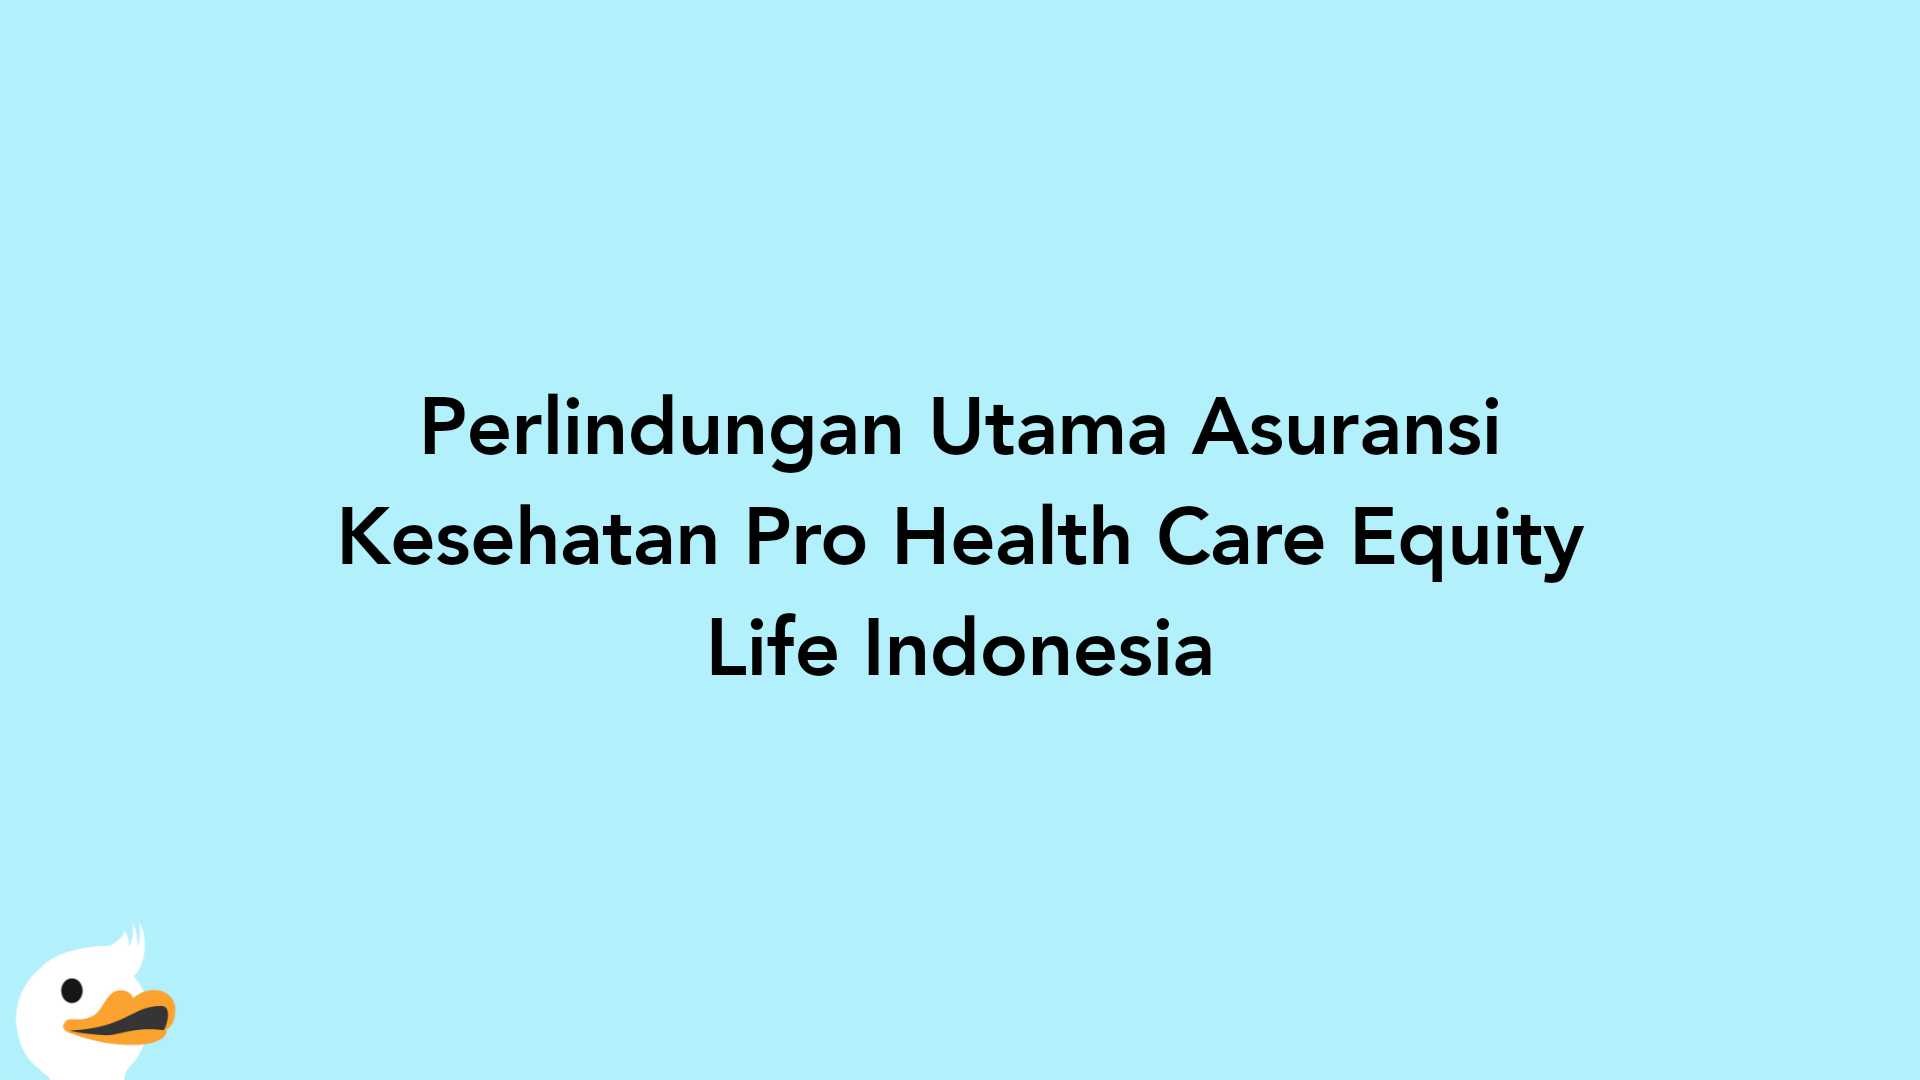 Perlindungan Utama Asuransi Kesehatan Pro Health Care Equity Life Indonesia